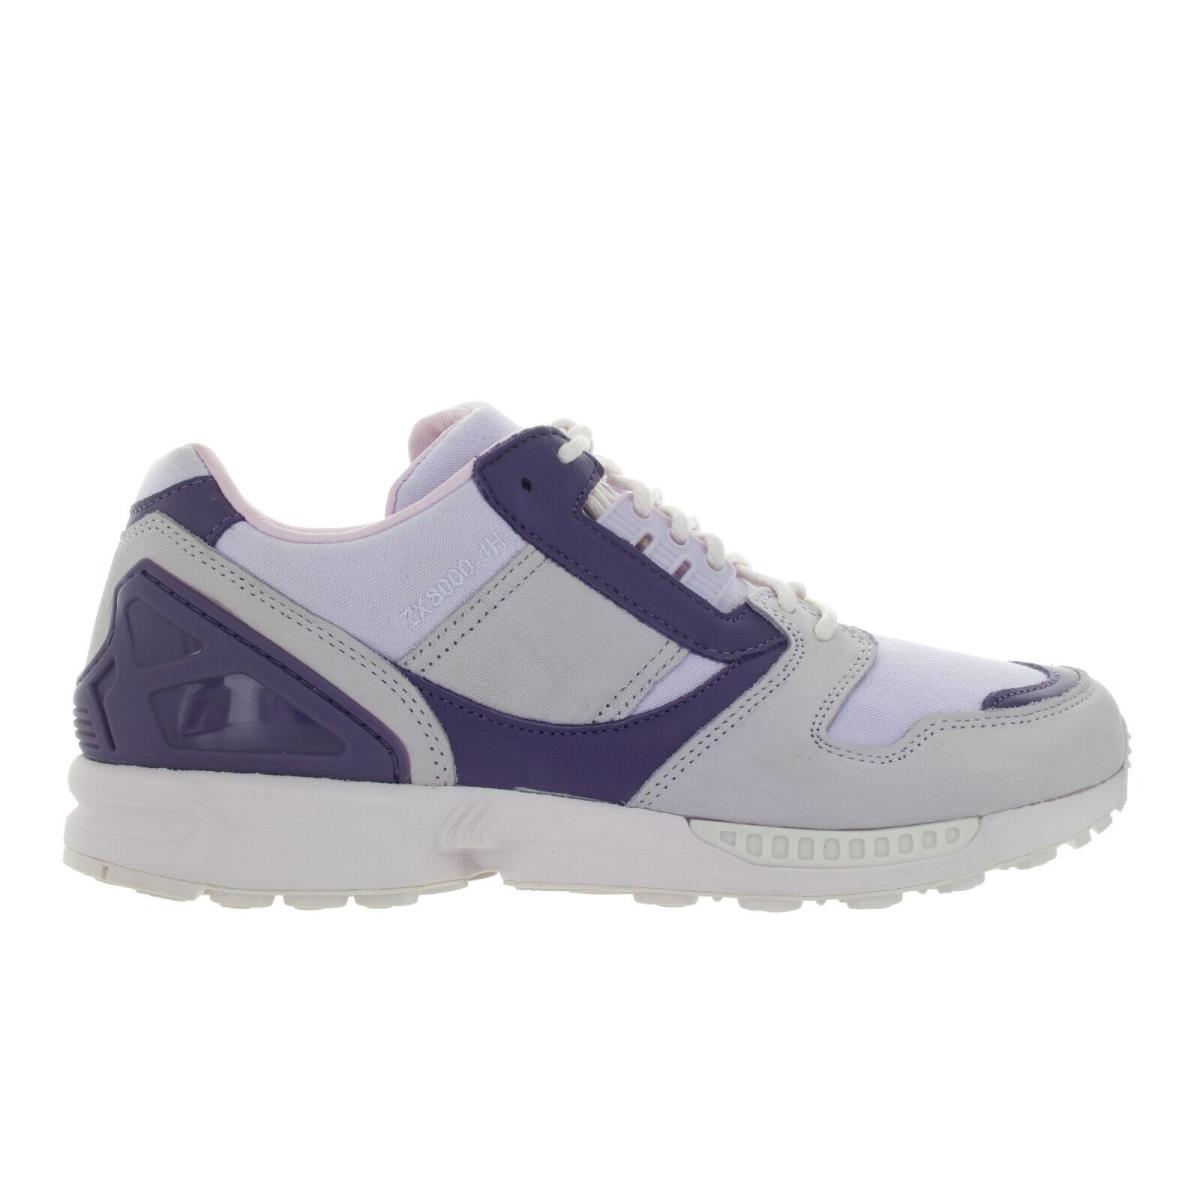 Adidas Men`s Originals ZX 8000 Deadhype Purple Training Shoes Multiple Size - Purple Tint, Aero Pink, Tech Purple